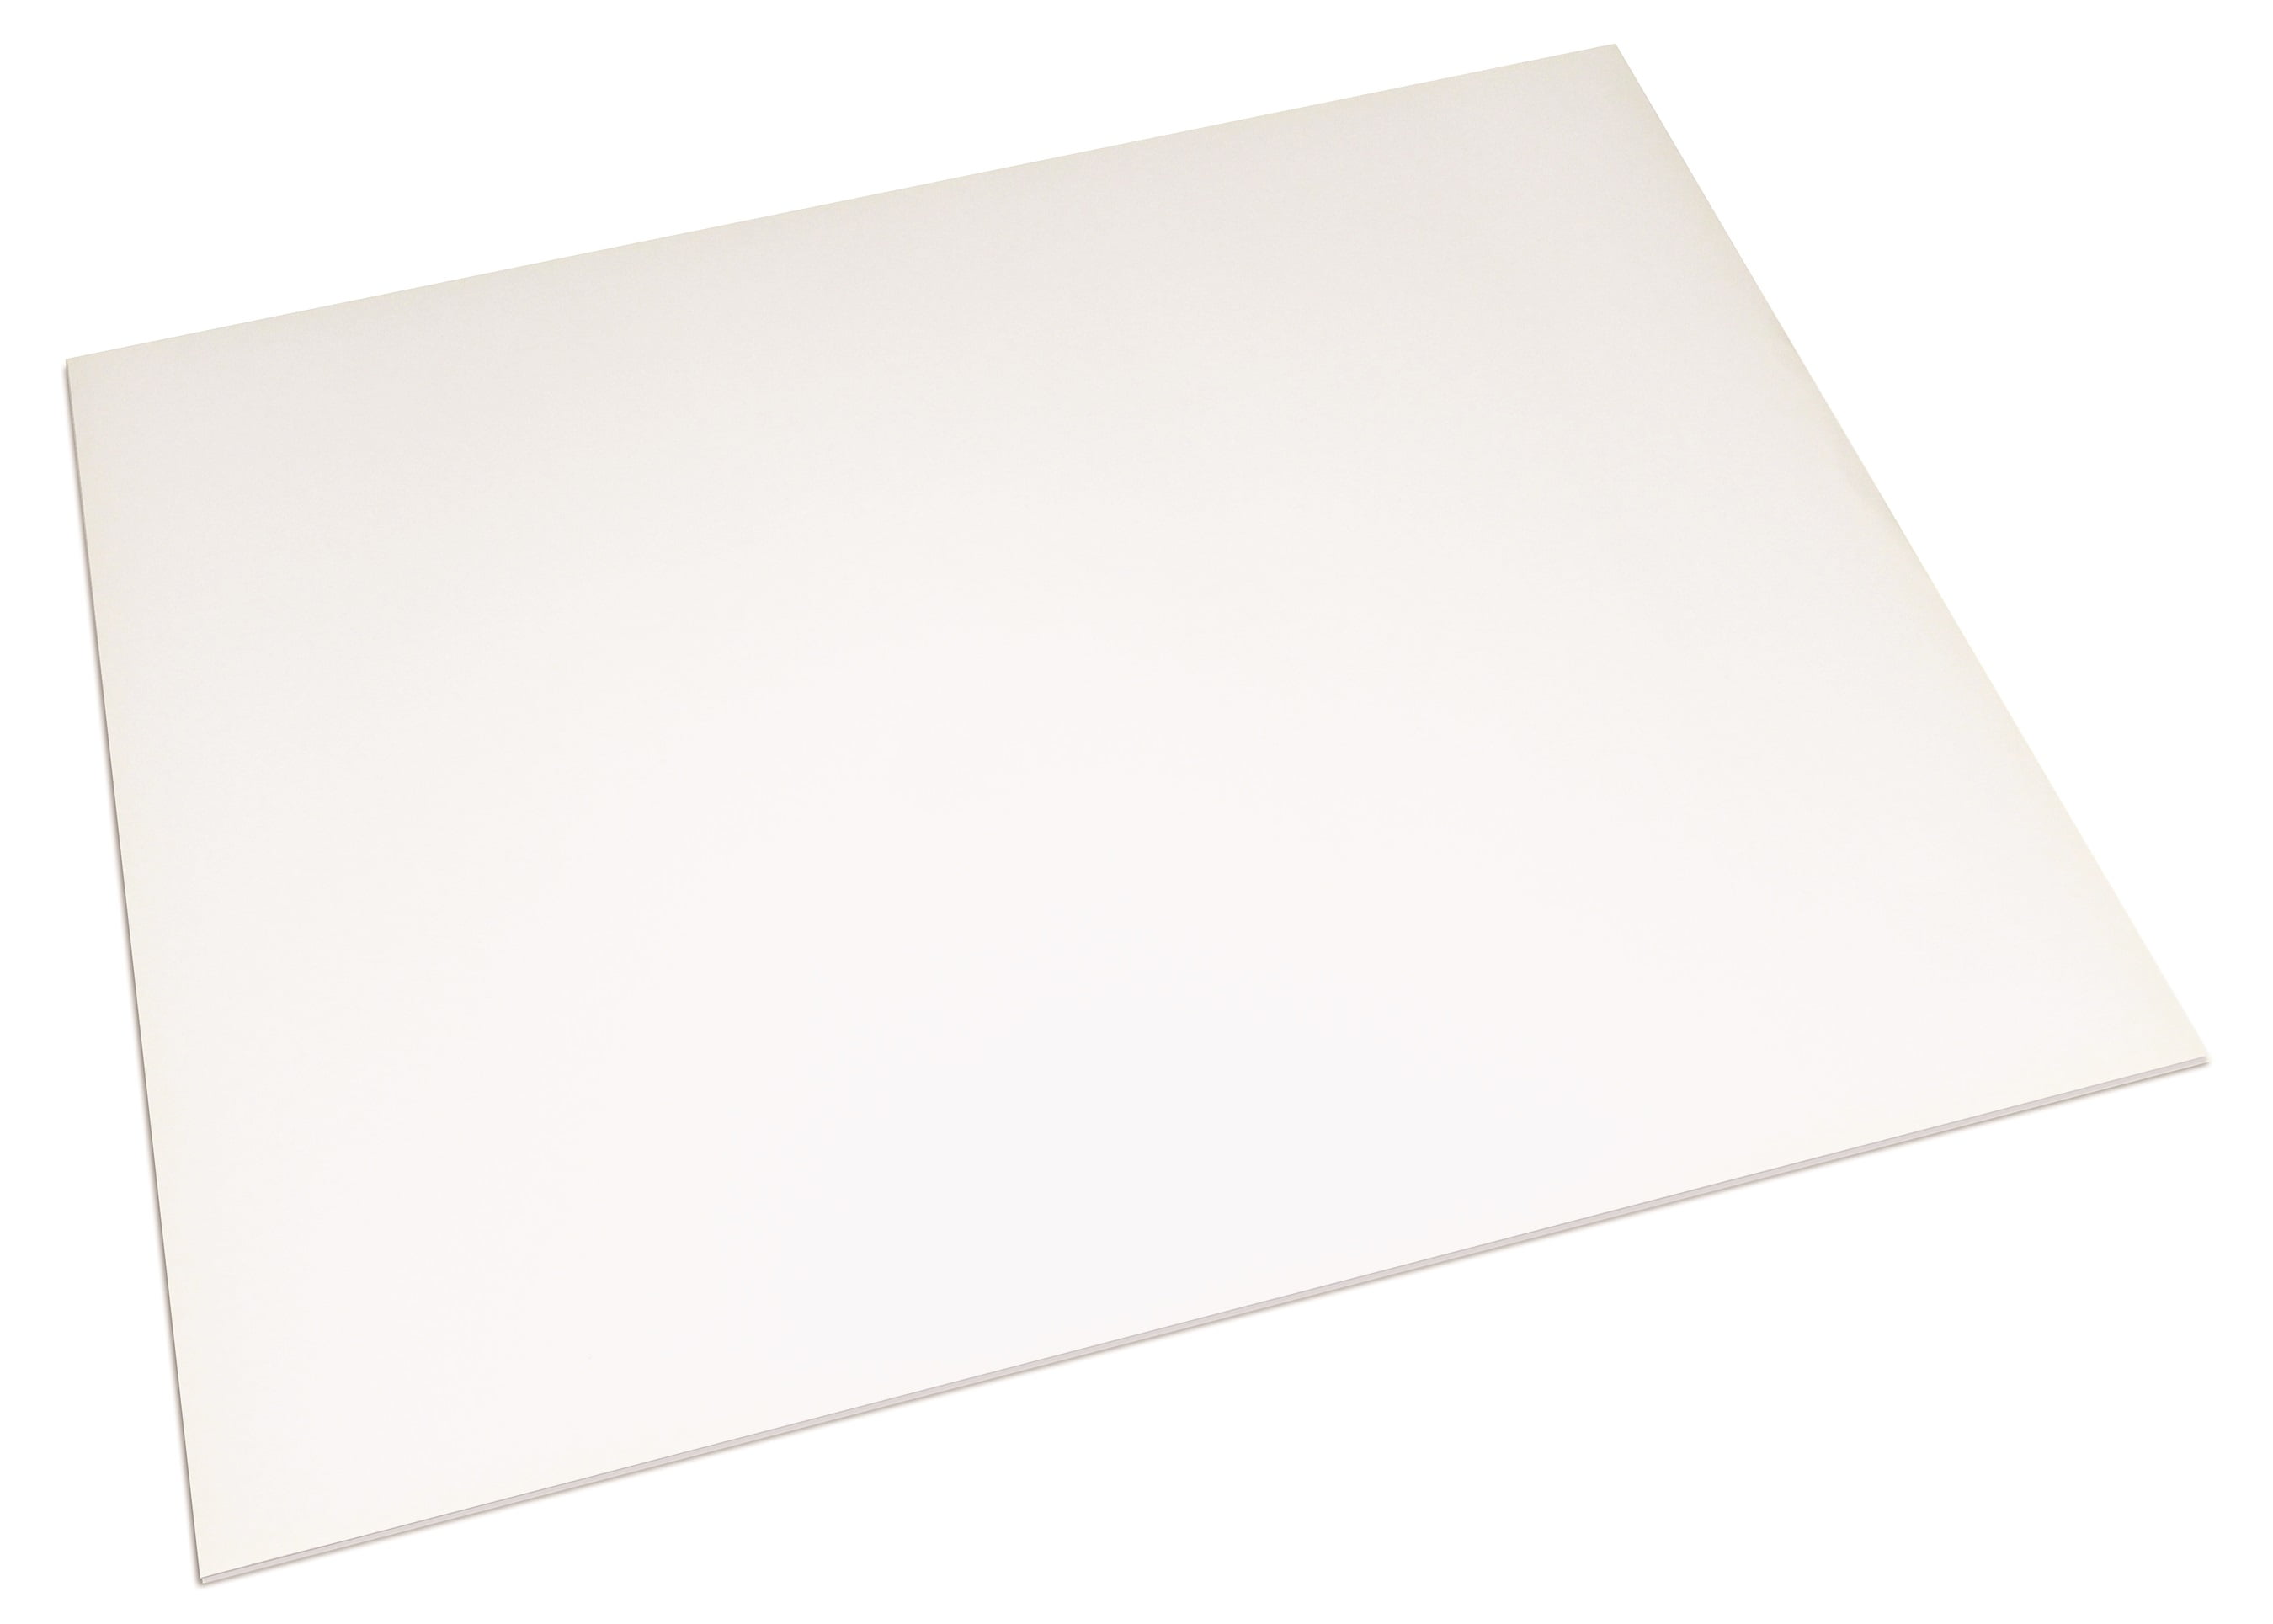 UCreate® Foam Board, White, 3/16" Thick, 15" x 20", 1 Sheet